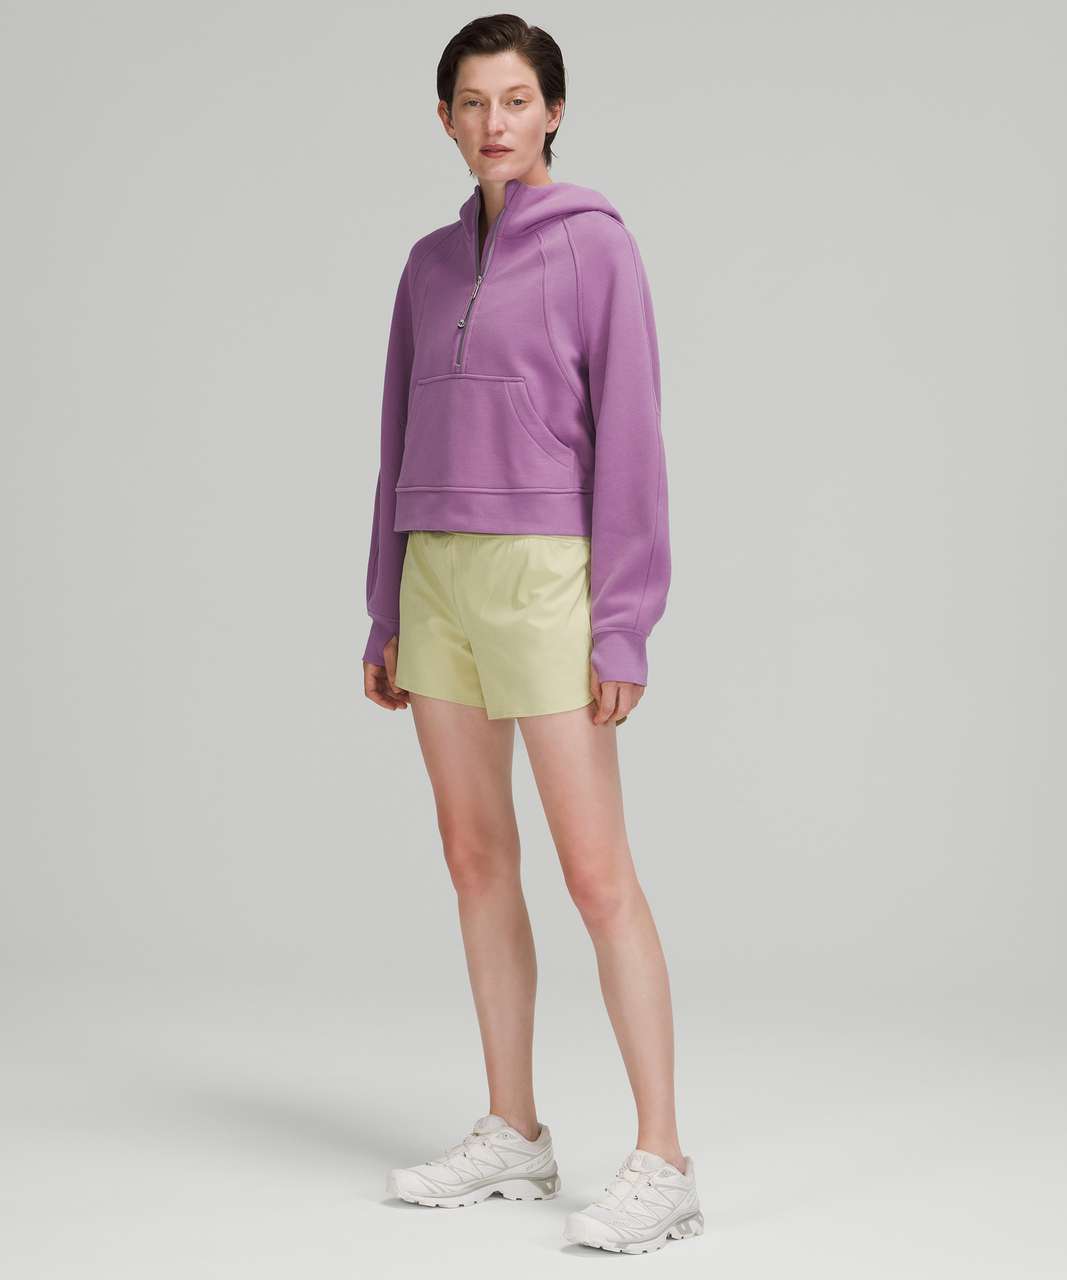 Lululemon Gray Purple Distressed Scuba II Zip Up Jacket Sweater Hoodie Size  4